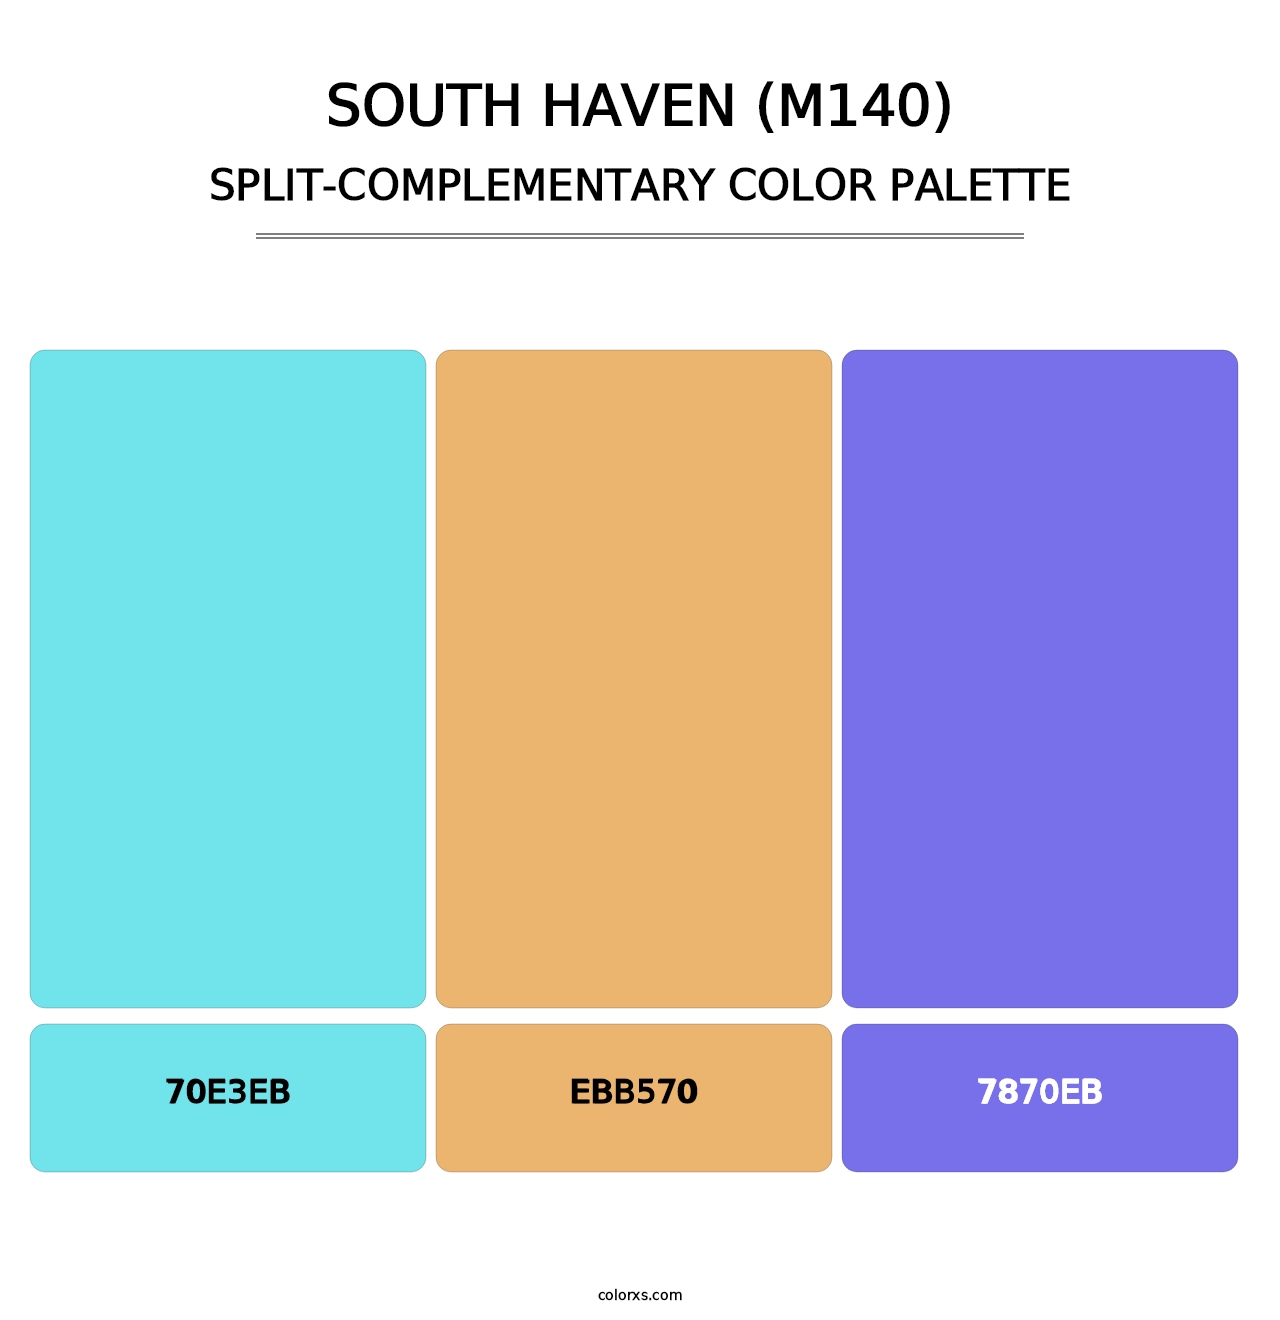 South Haven (M140) - Split-Complementary Color Palette